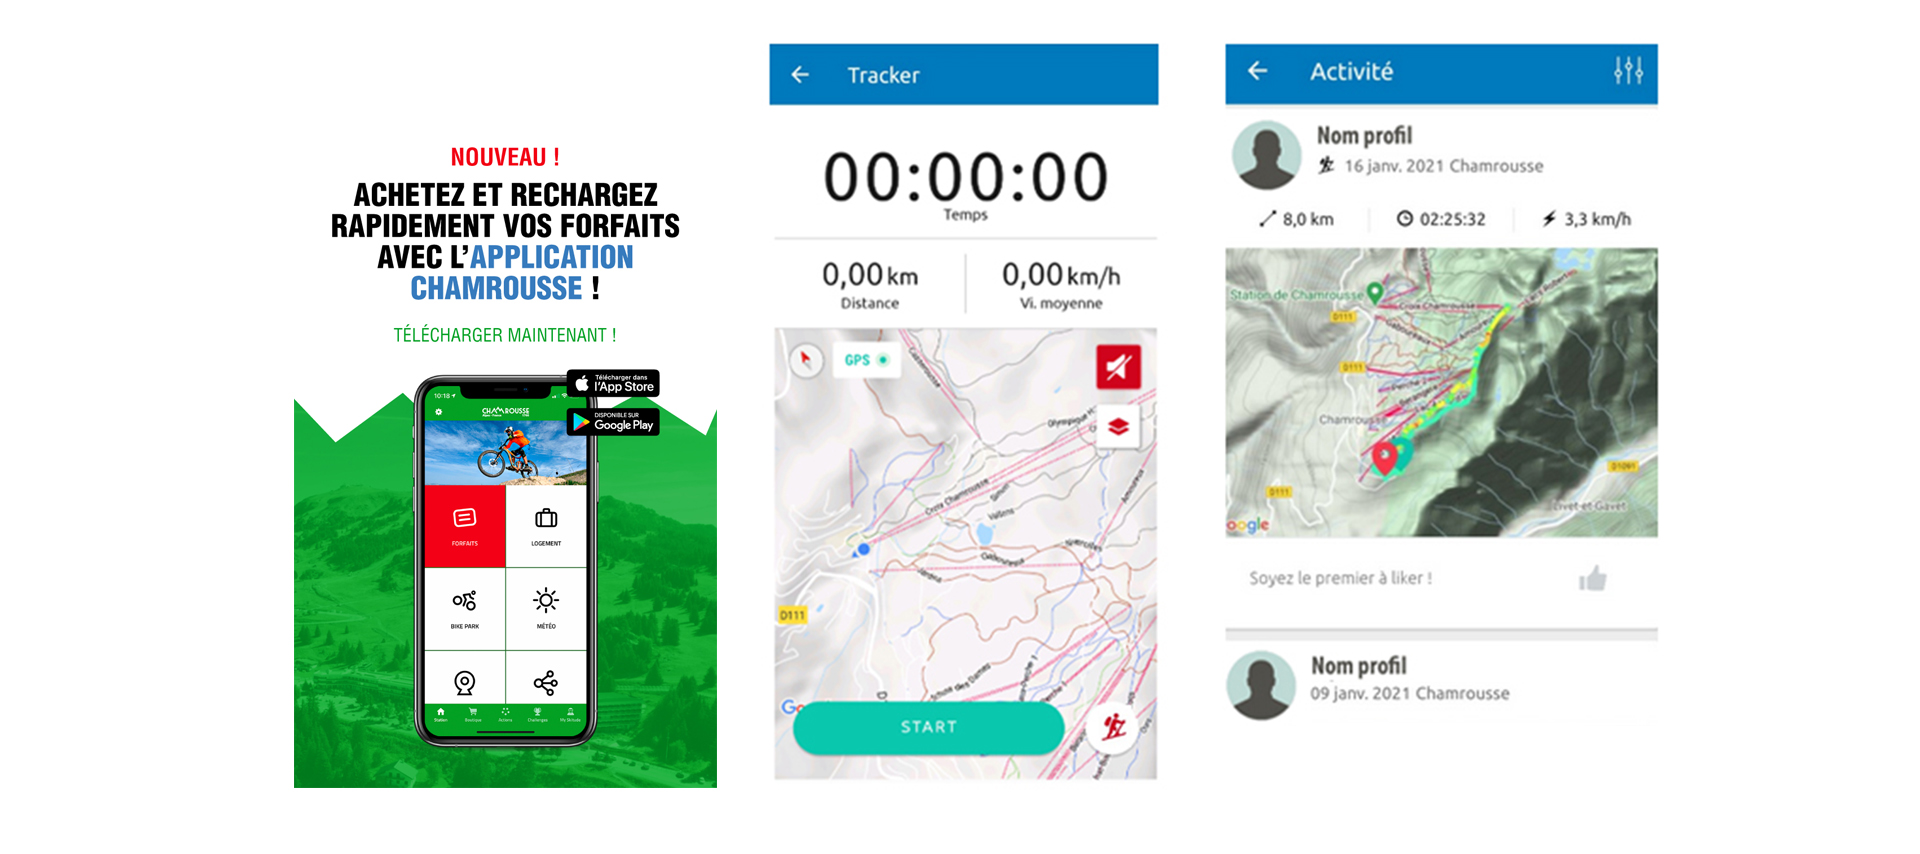 Chamrousse application mobile enregistrement activité station ski montagne grenoble lyon isère alpes france - © Chamrousse / Skitude